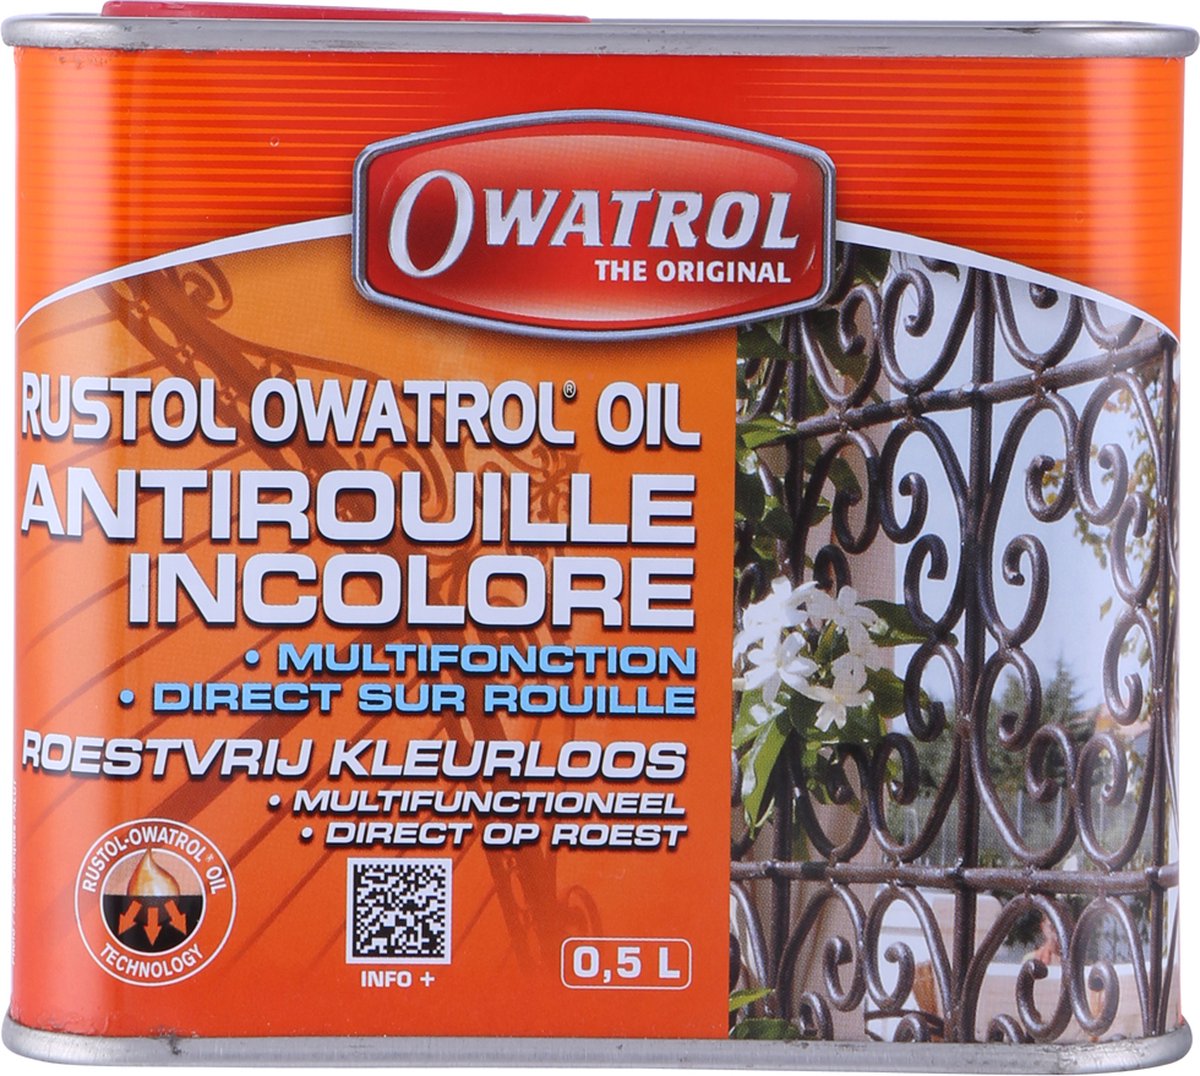 Rustol-Owatrol antirouille incolore muli-fonction Owatrol